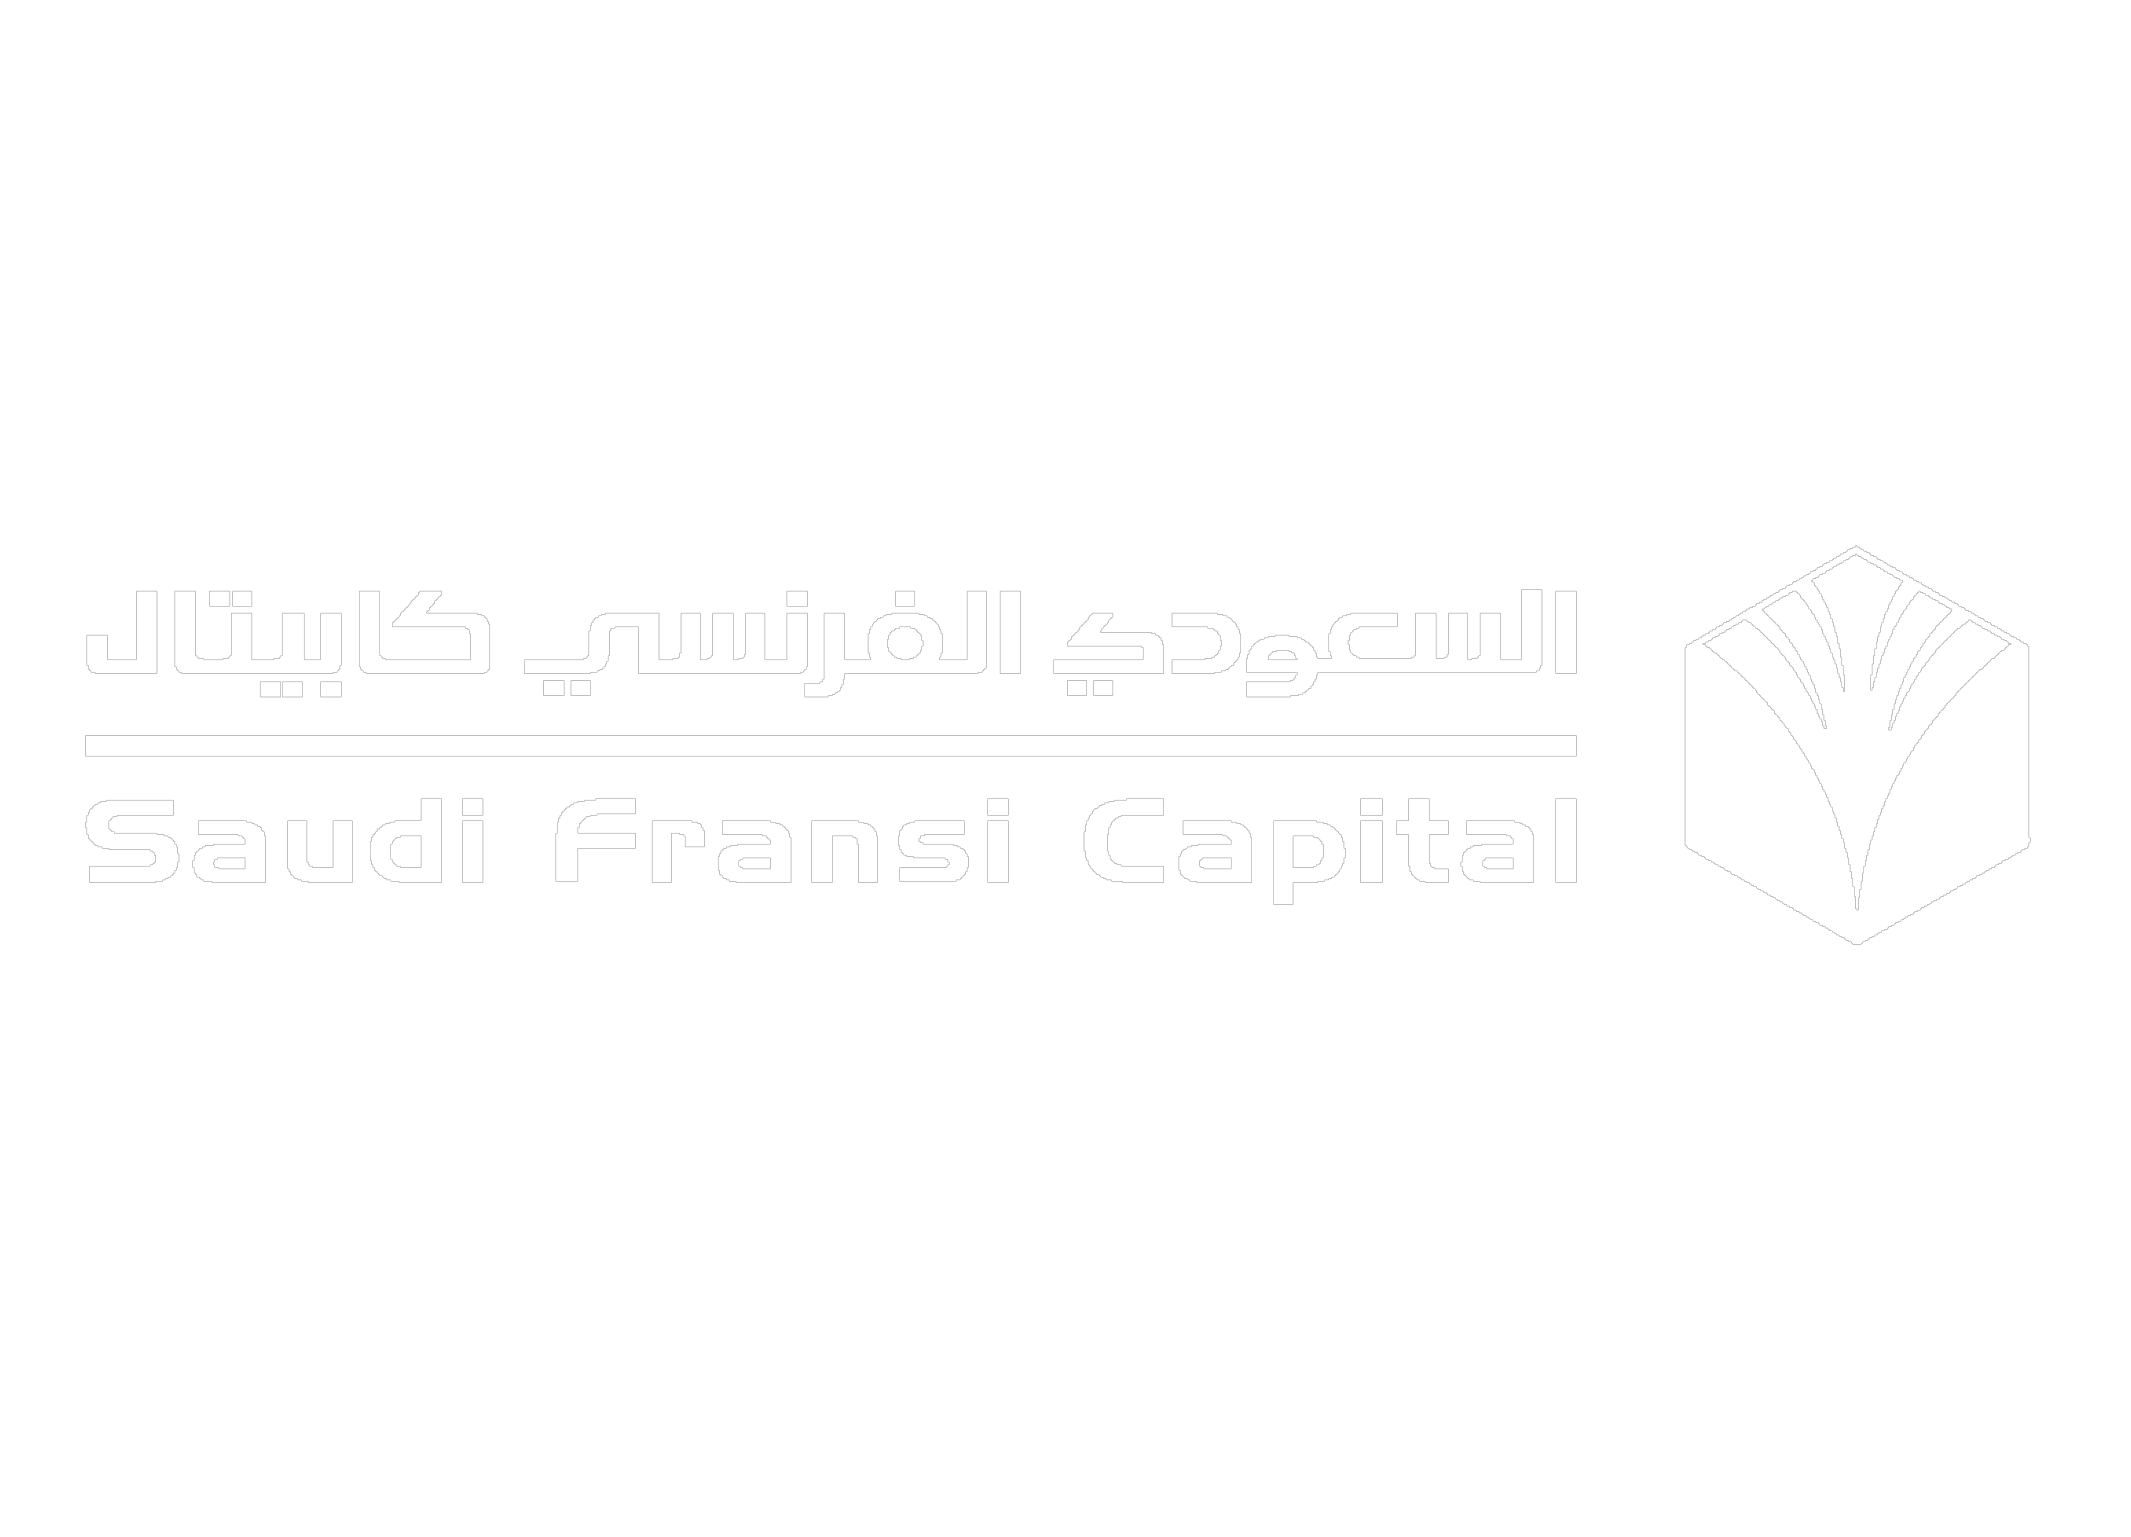 Saudi Fransi Capital logo